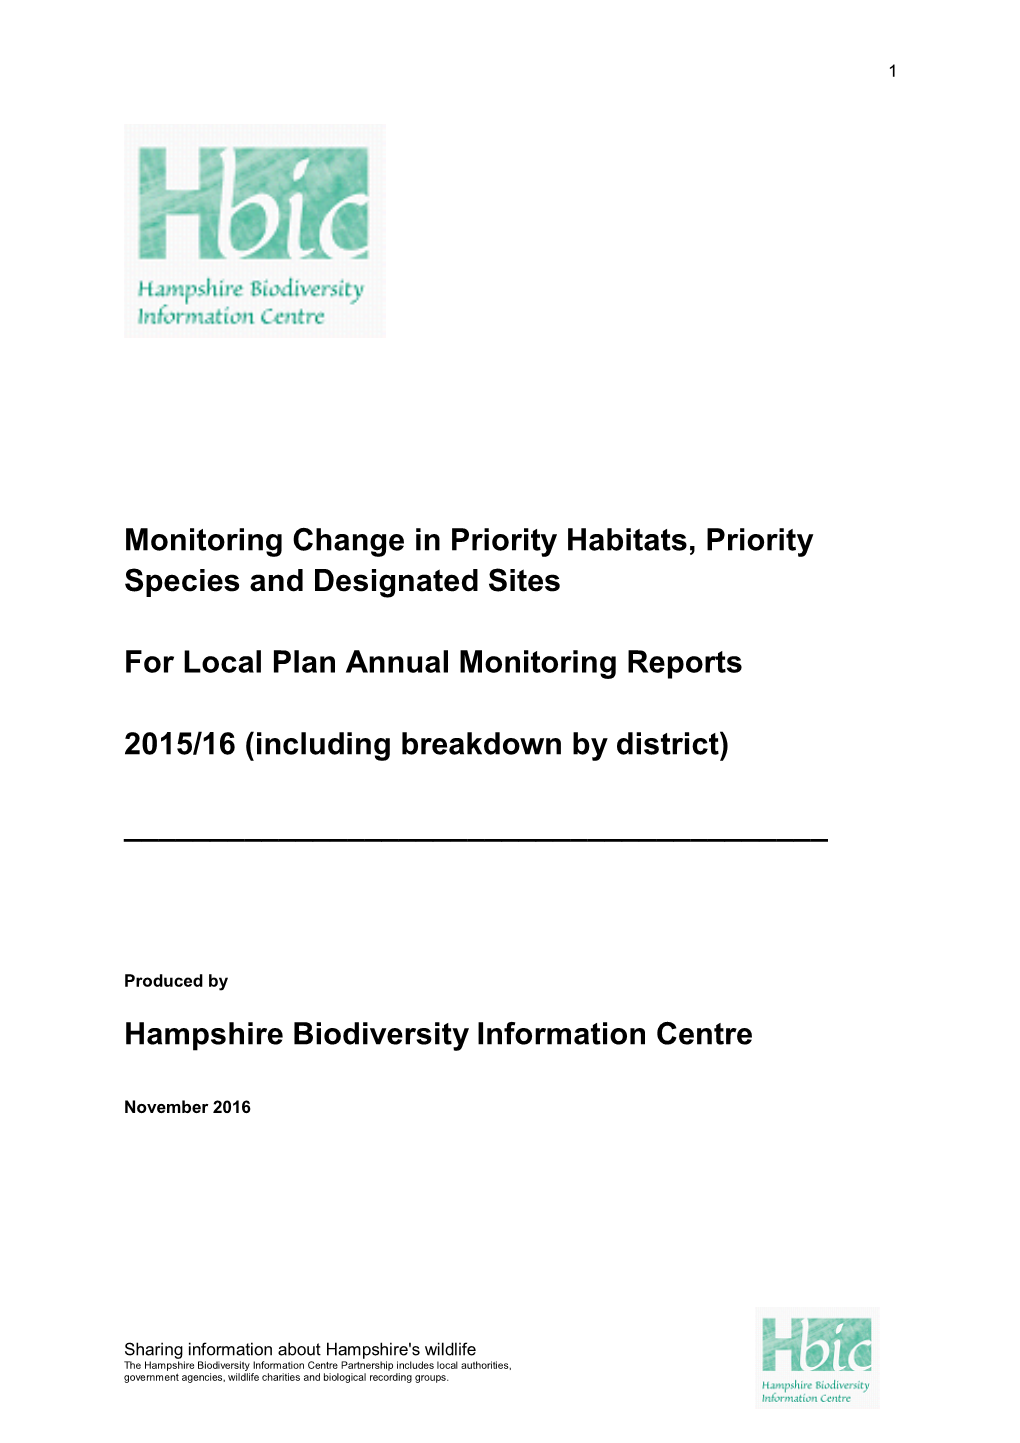 Change in Priority Species, Habitats & Designated